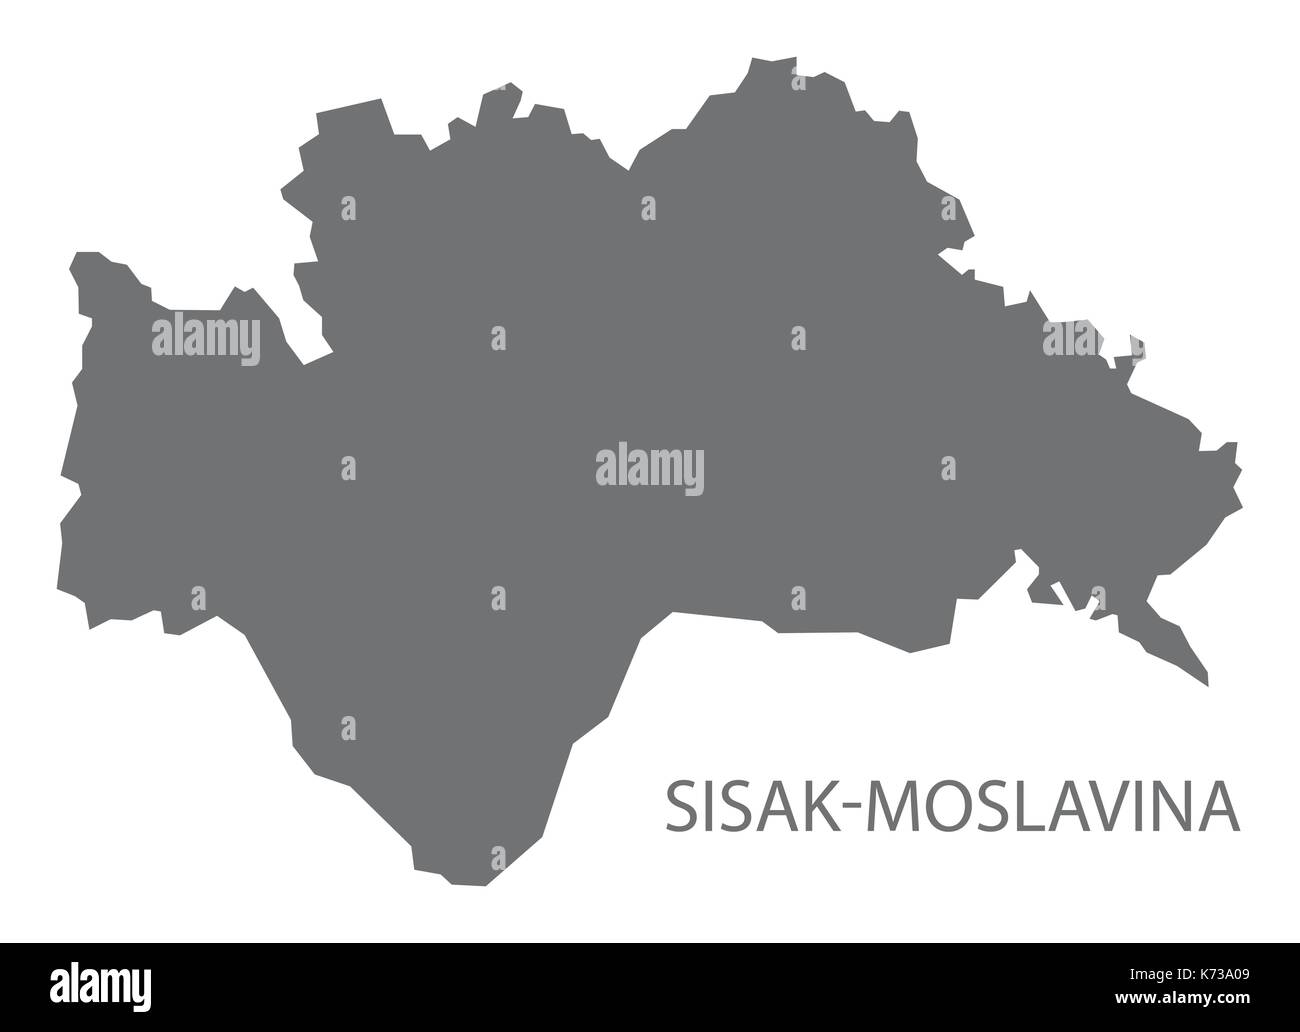 Kroatien Sisak-Moslavina county Karte grau Abbildung silhouette Form Stock Vektor